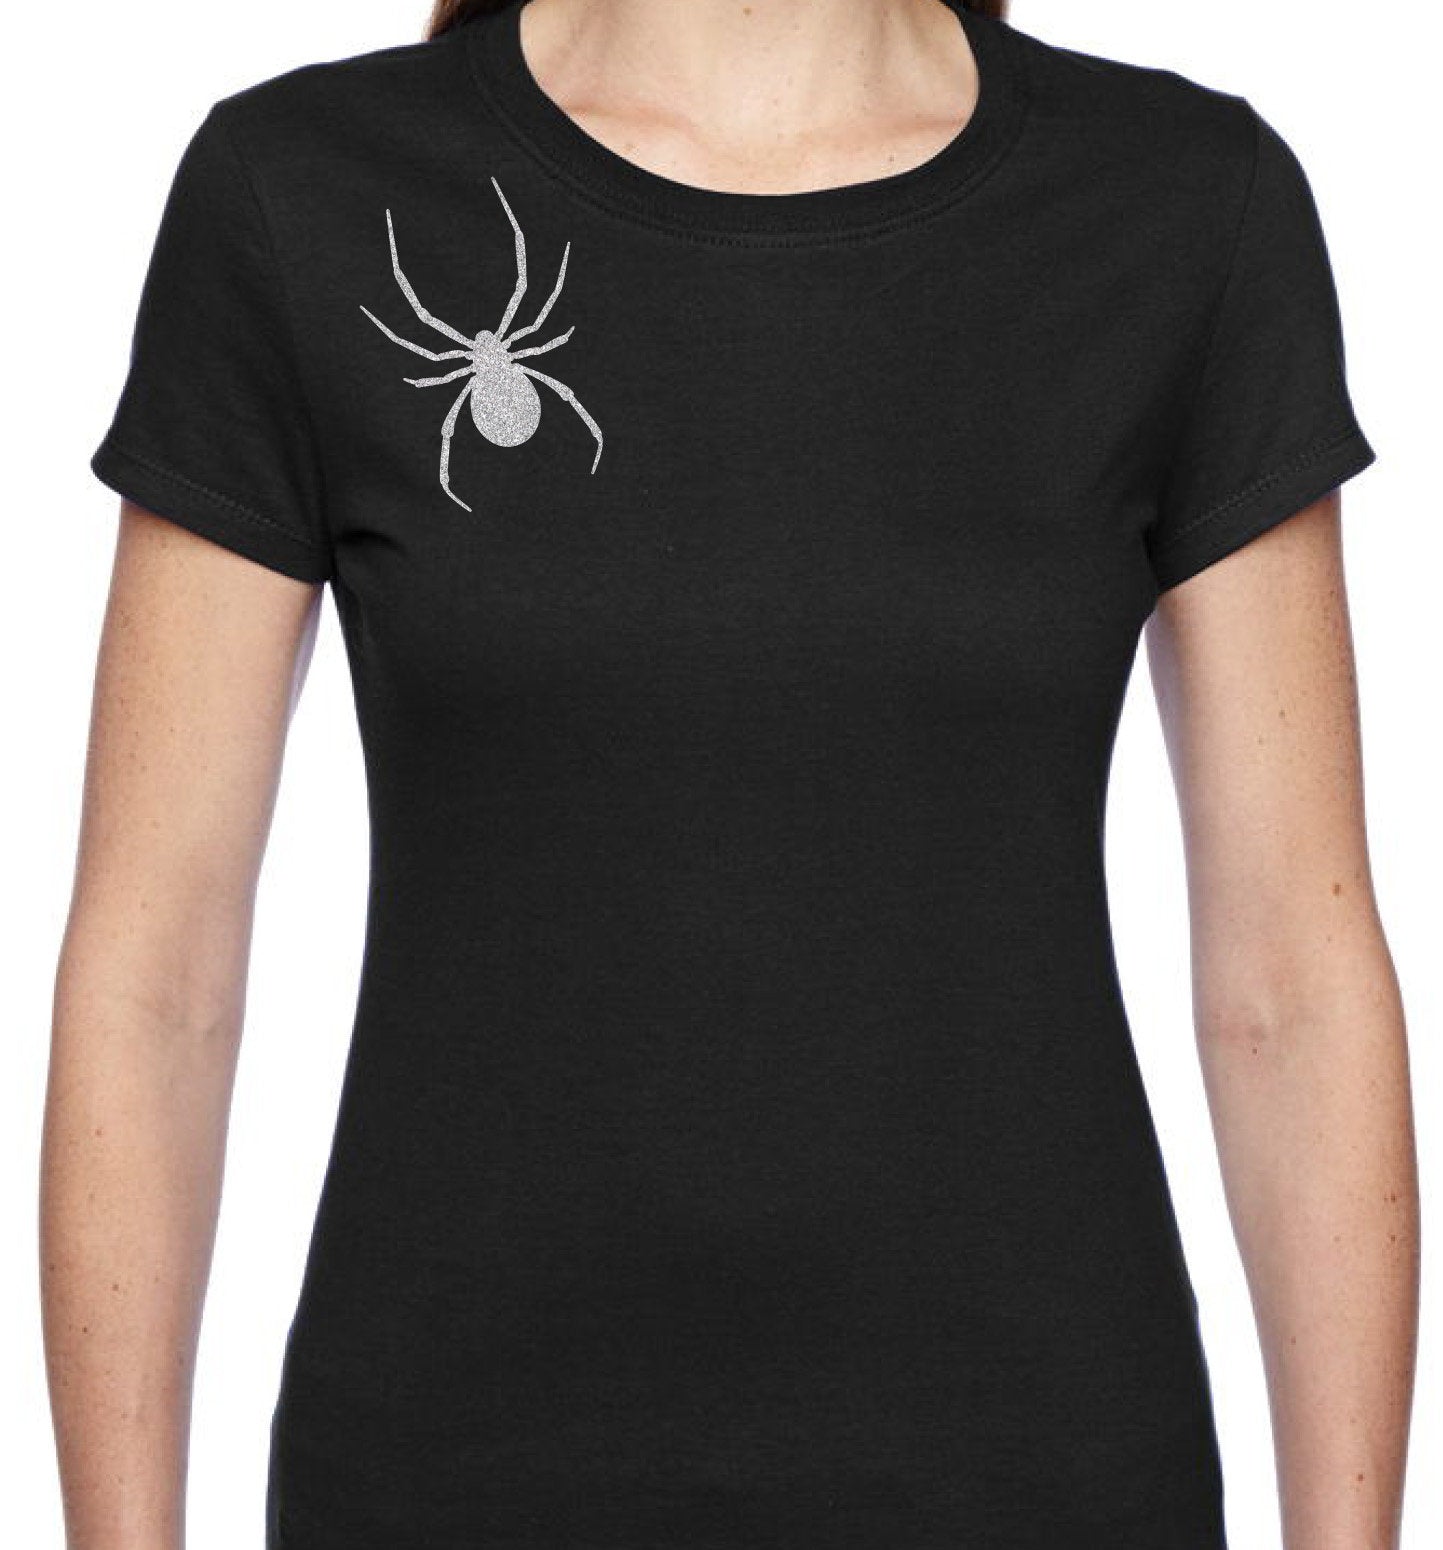 Spider "Brooch" T-Shirt - Silver Glitter motif